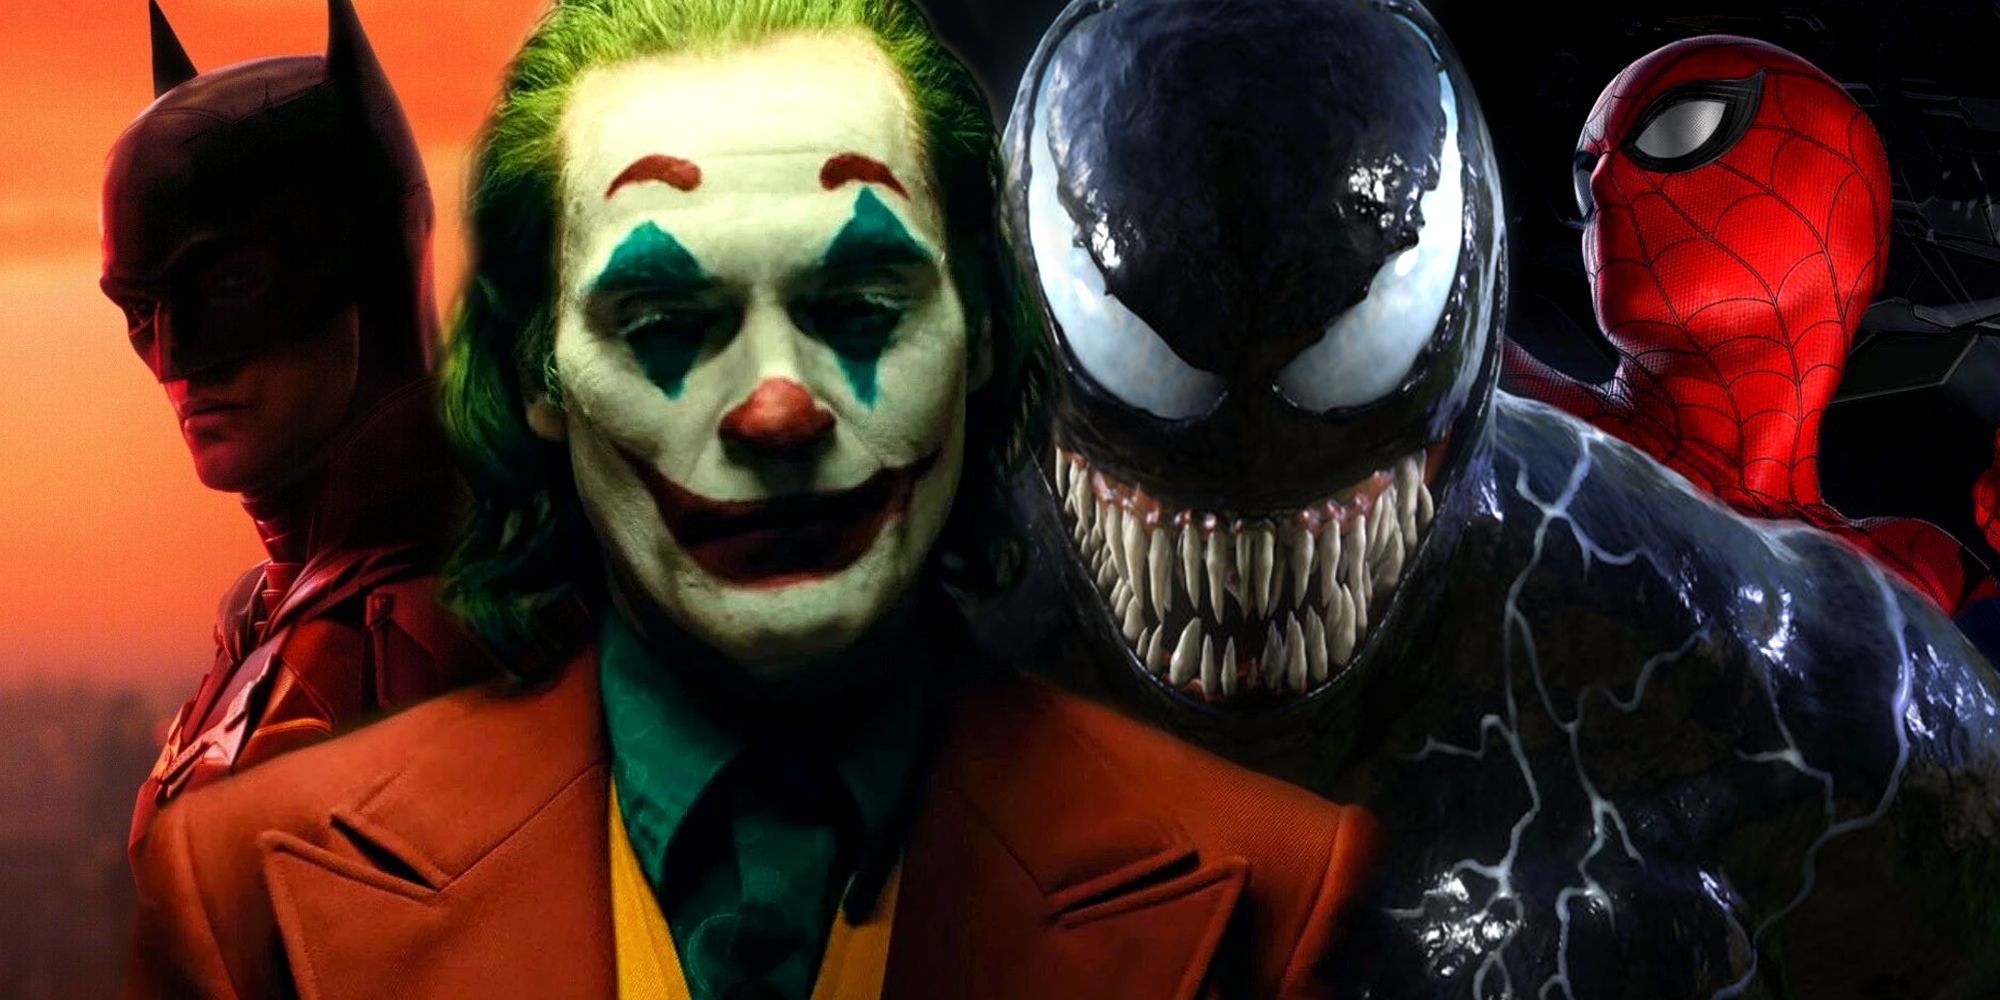 DC's The Batman and Joker vs Marvel's Spider-Man and Venom